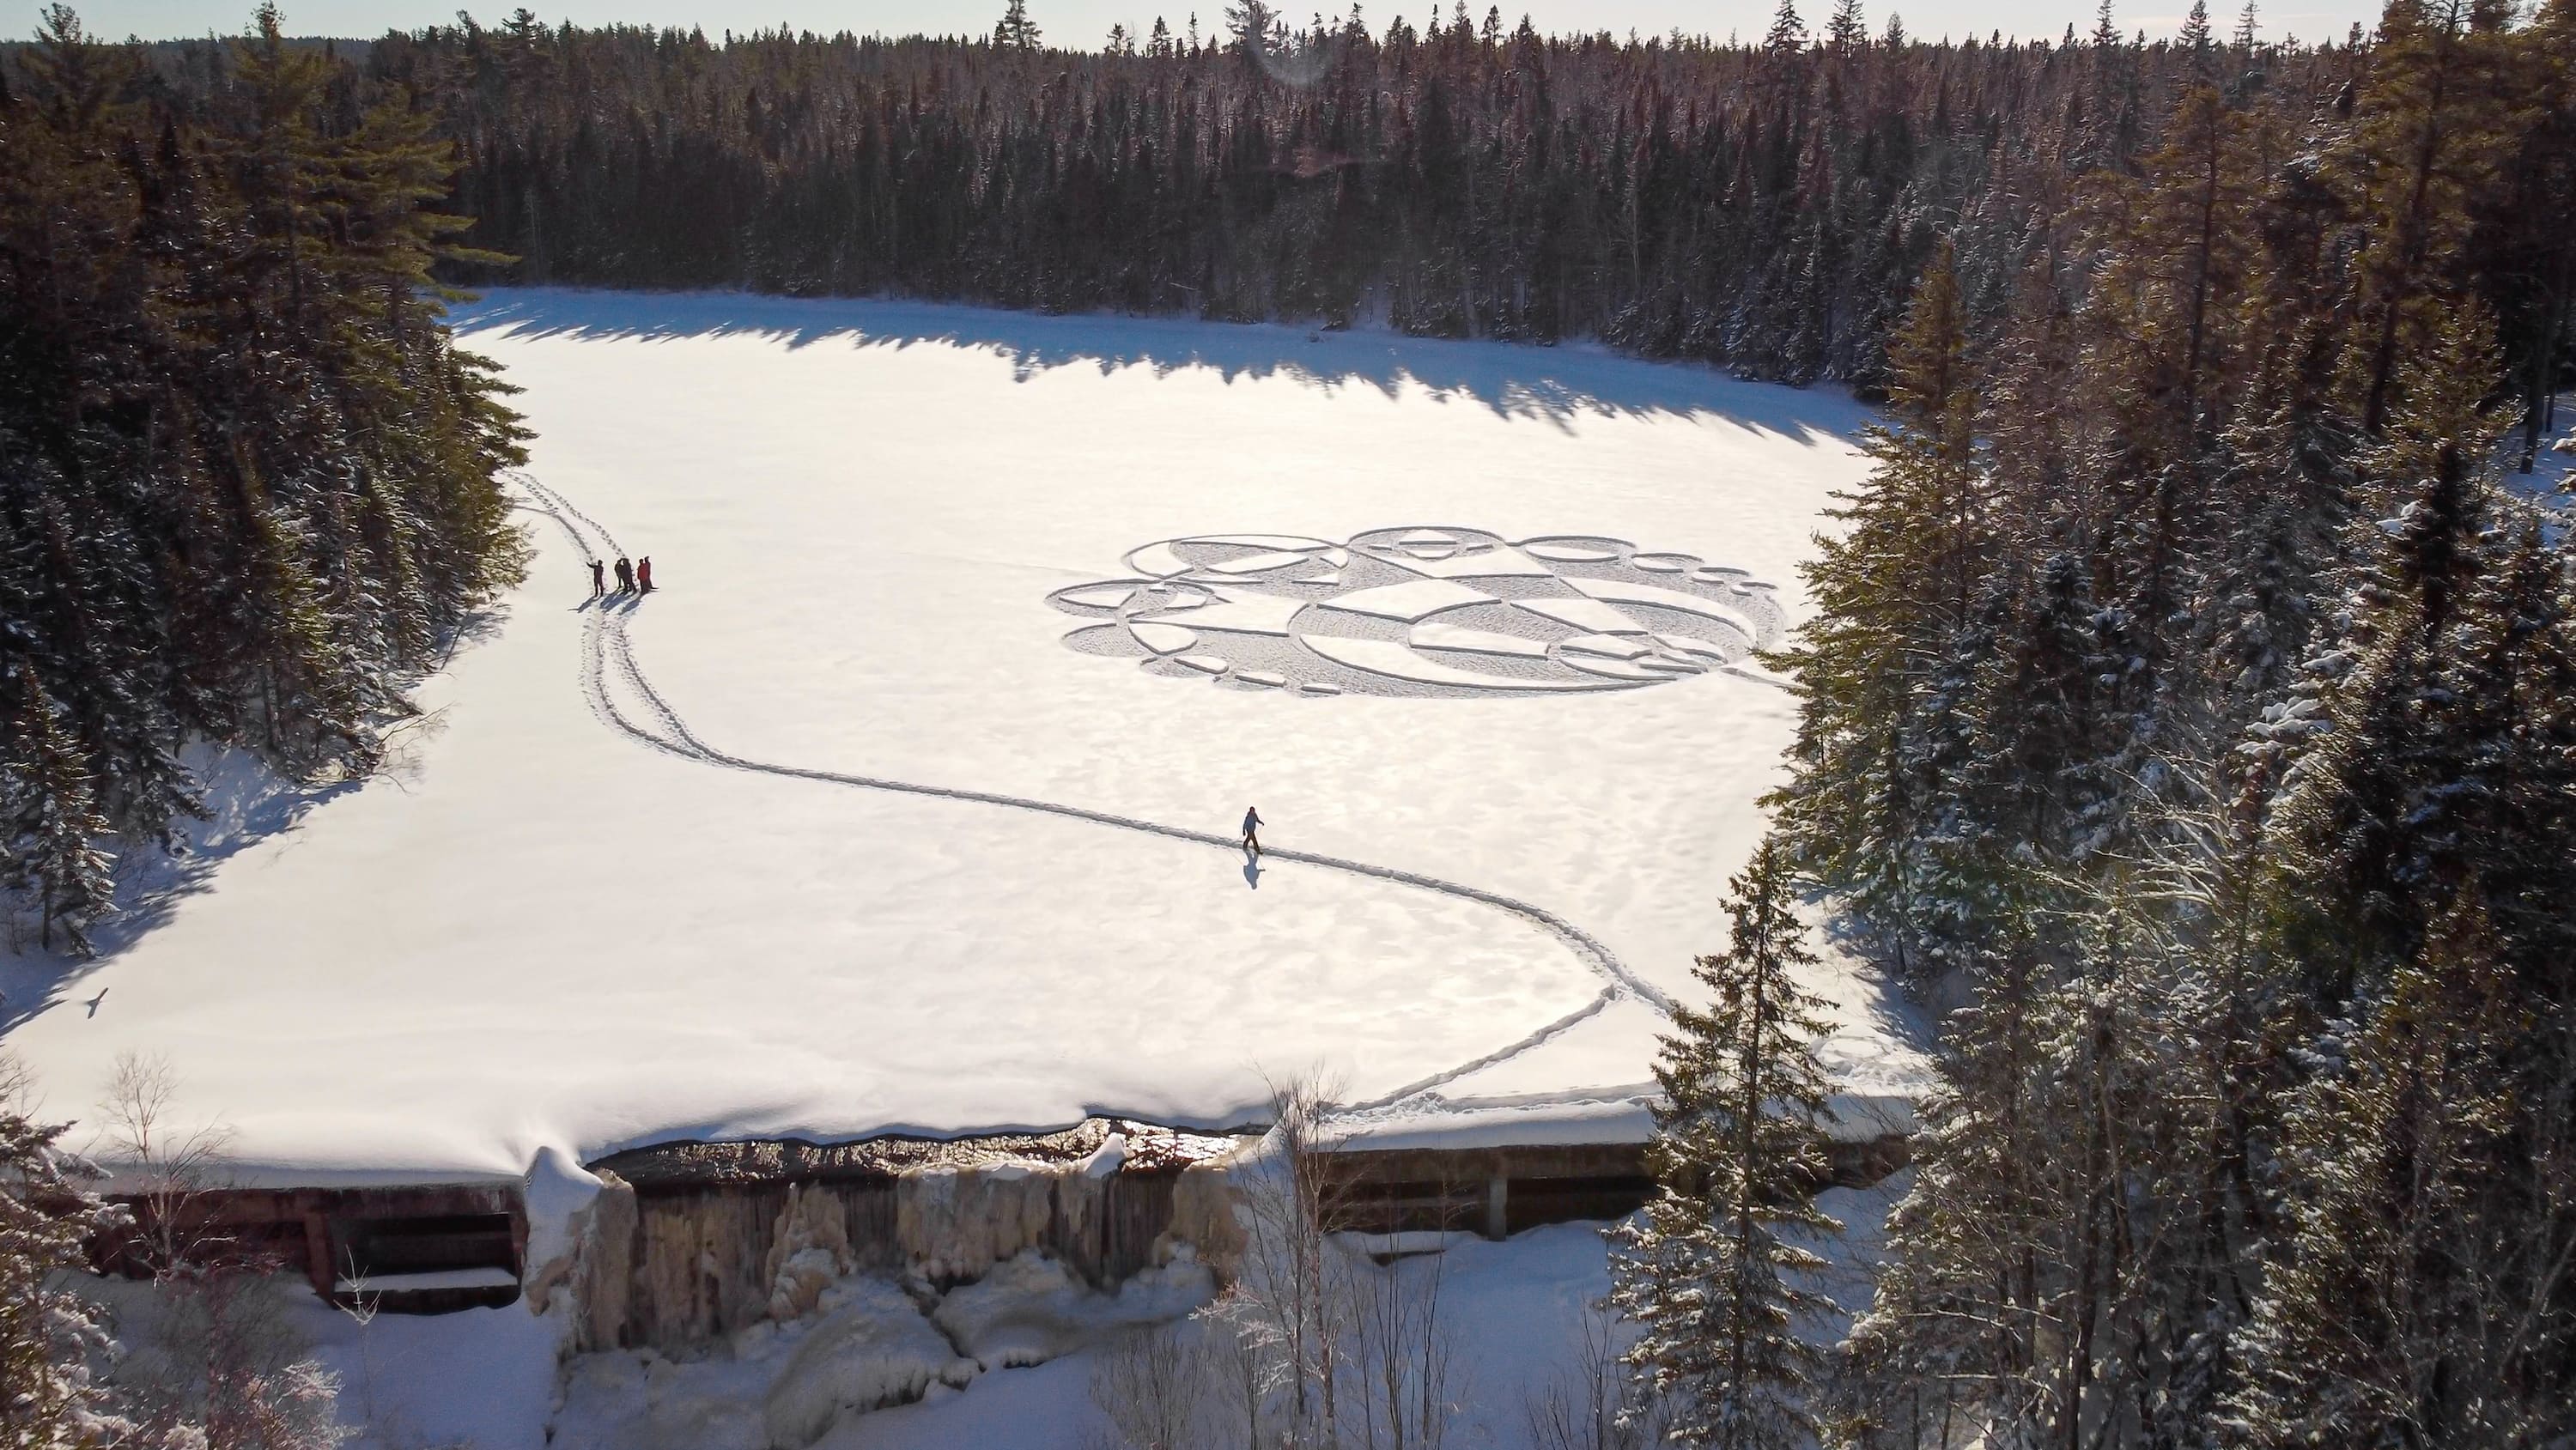 Alien crop circles? Nope, just some spectacular snow art in New Brunswick